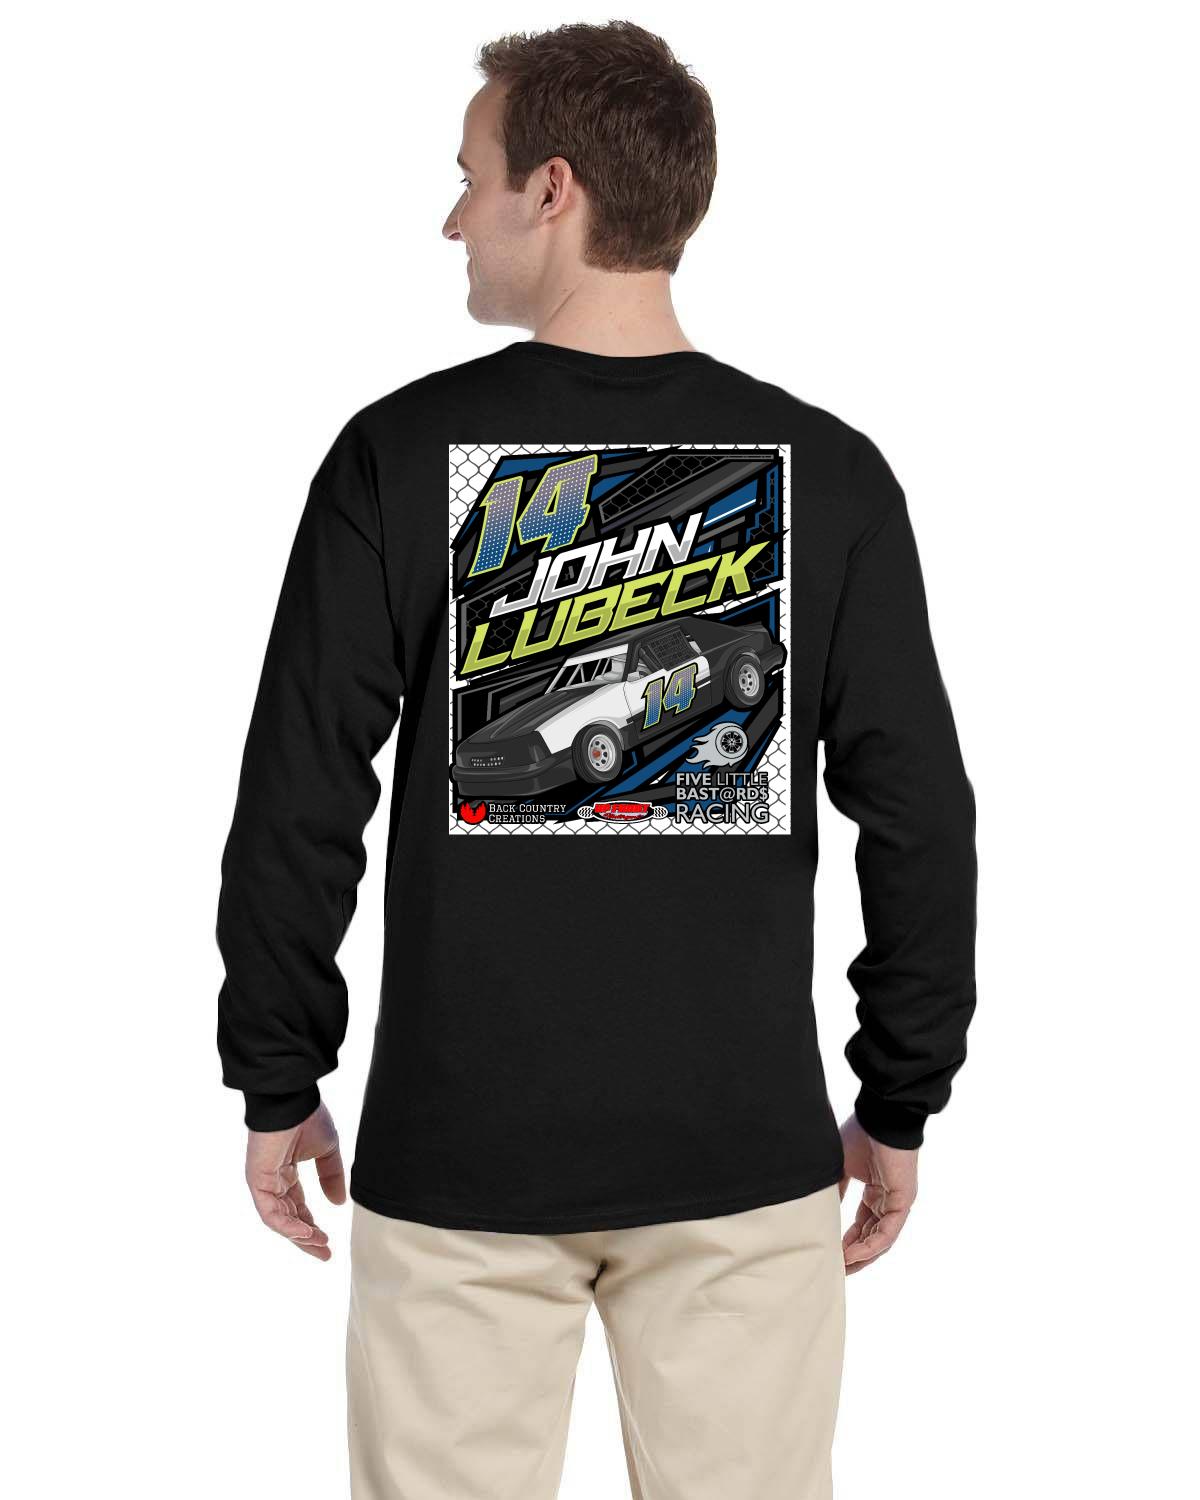 John Lubeck / Upfront Motorsports Adult Long-Sleeve T-Shirt